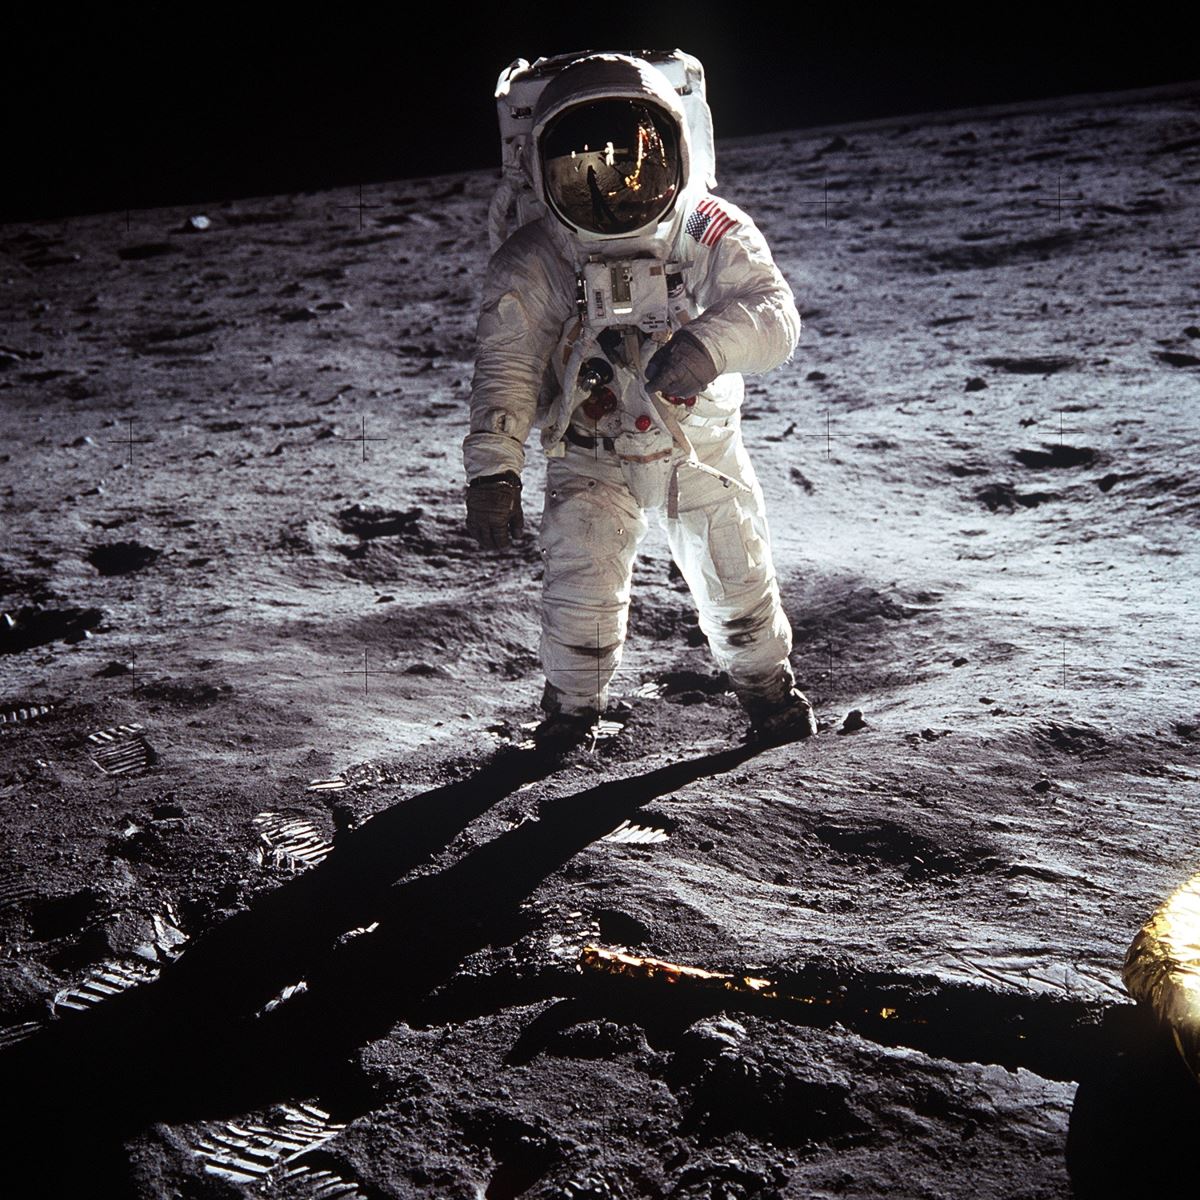 An astronaut walking on the moon